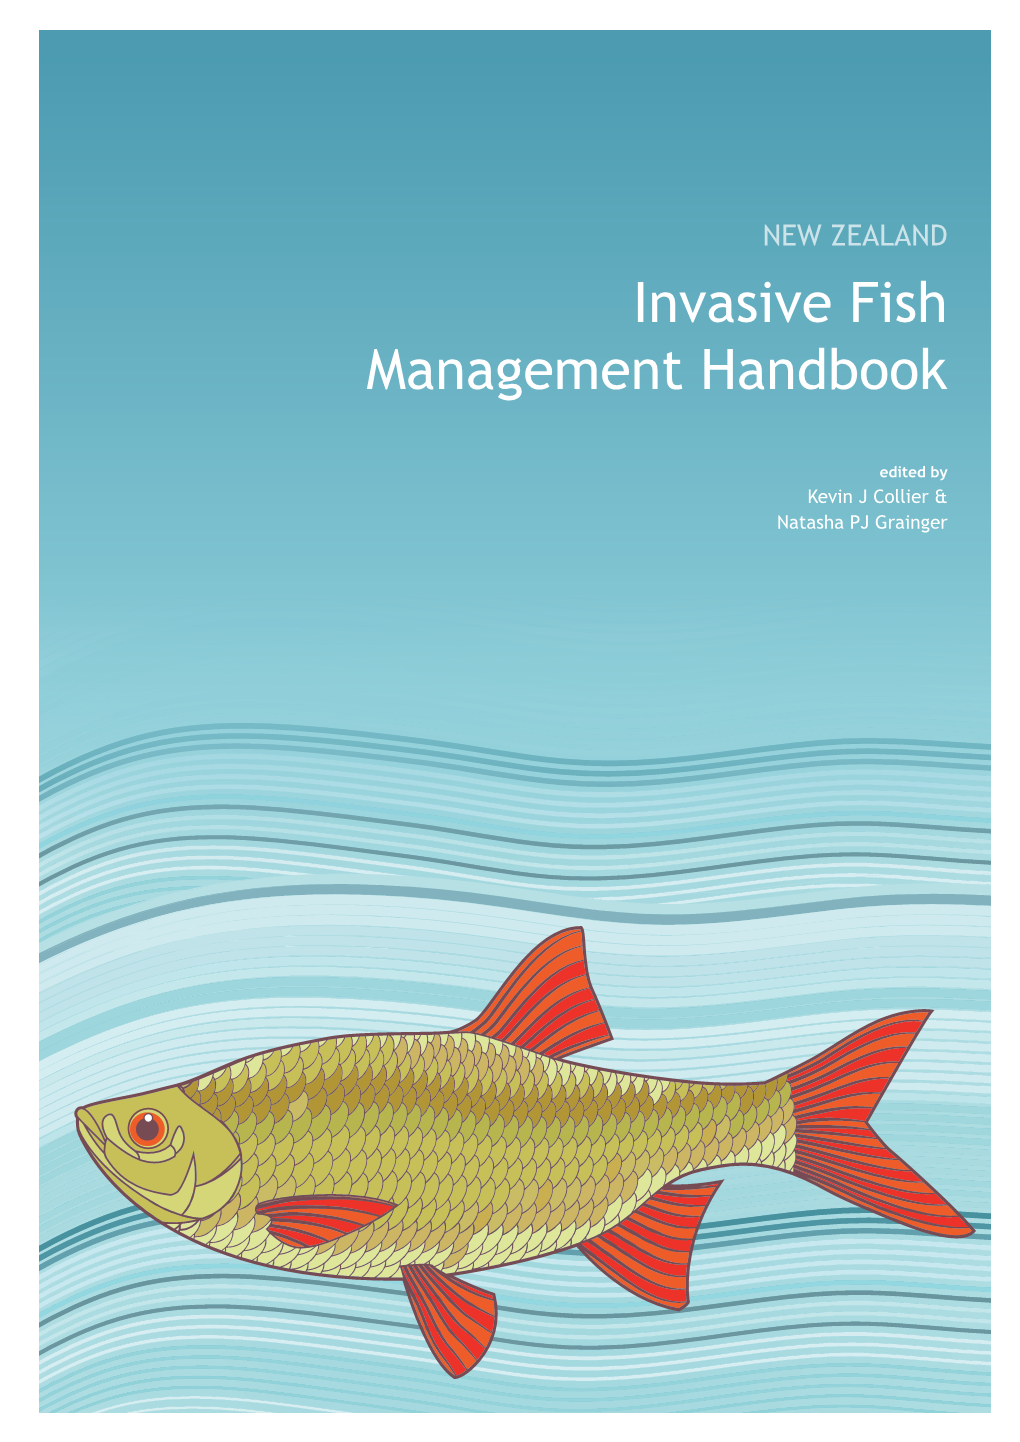 New Zealand Invasive Fish Management Handbook 2015